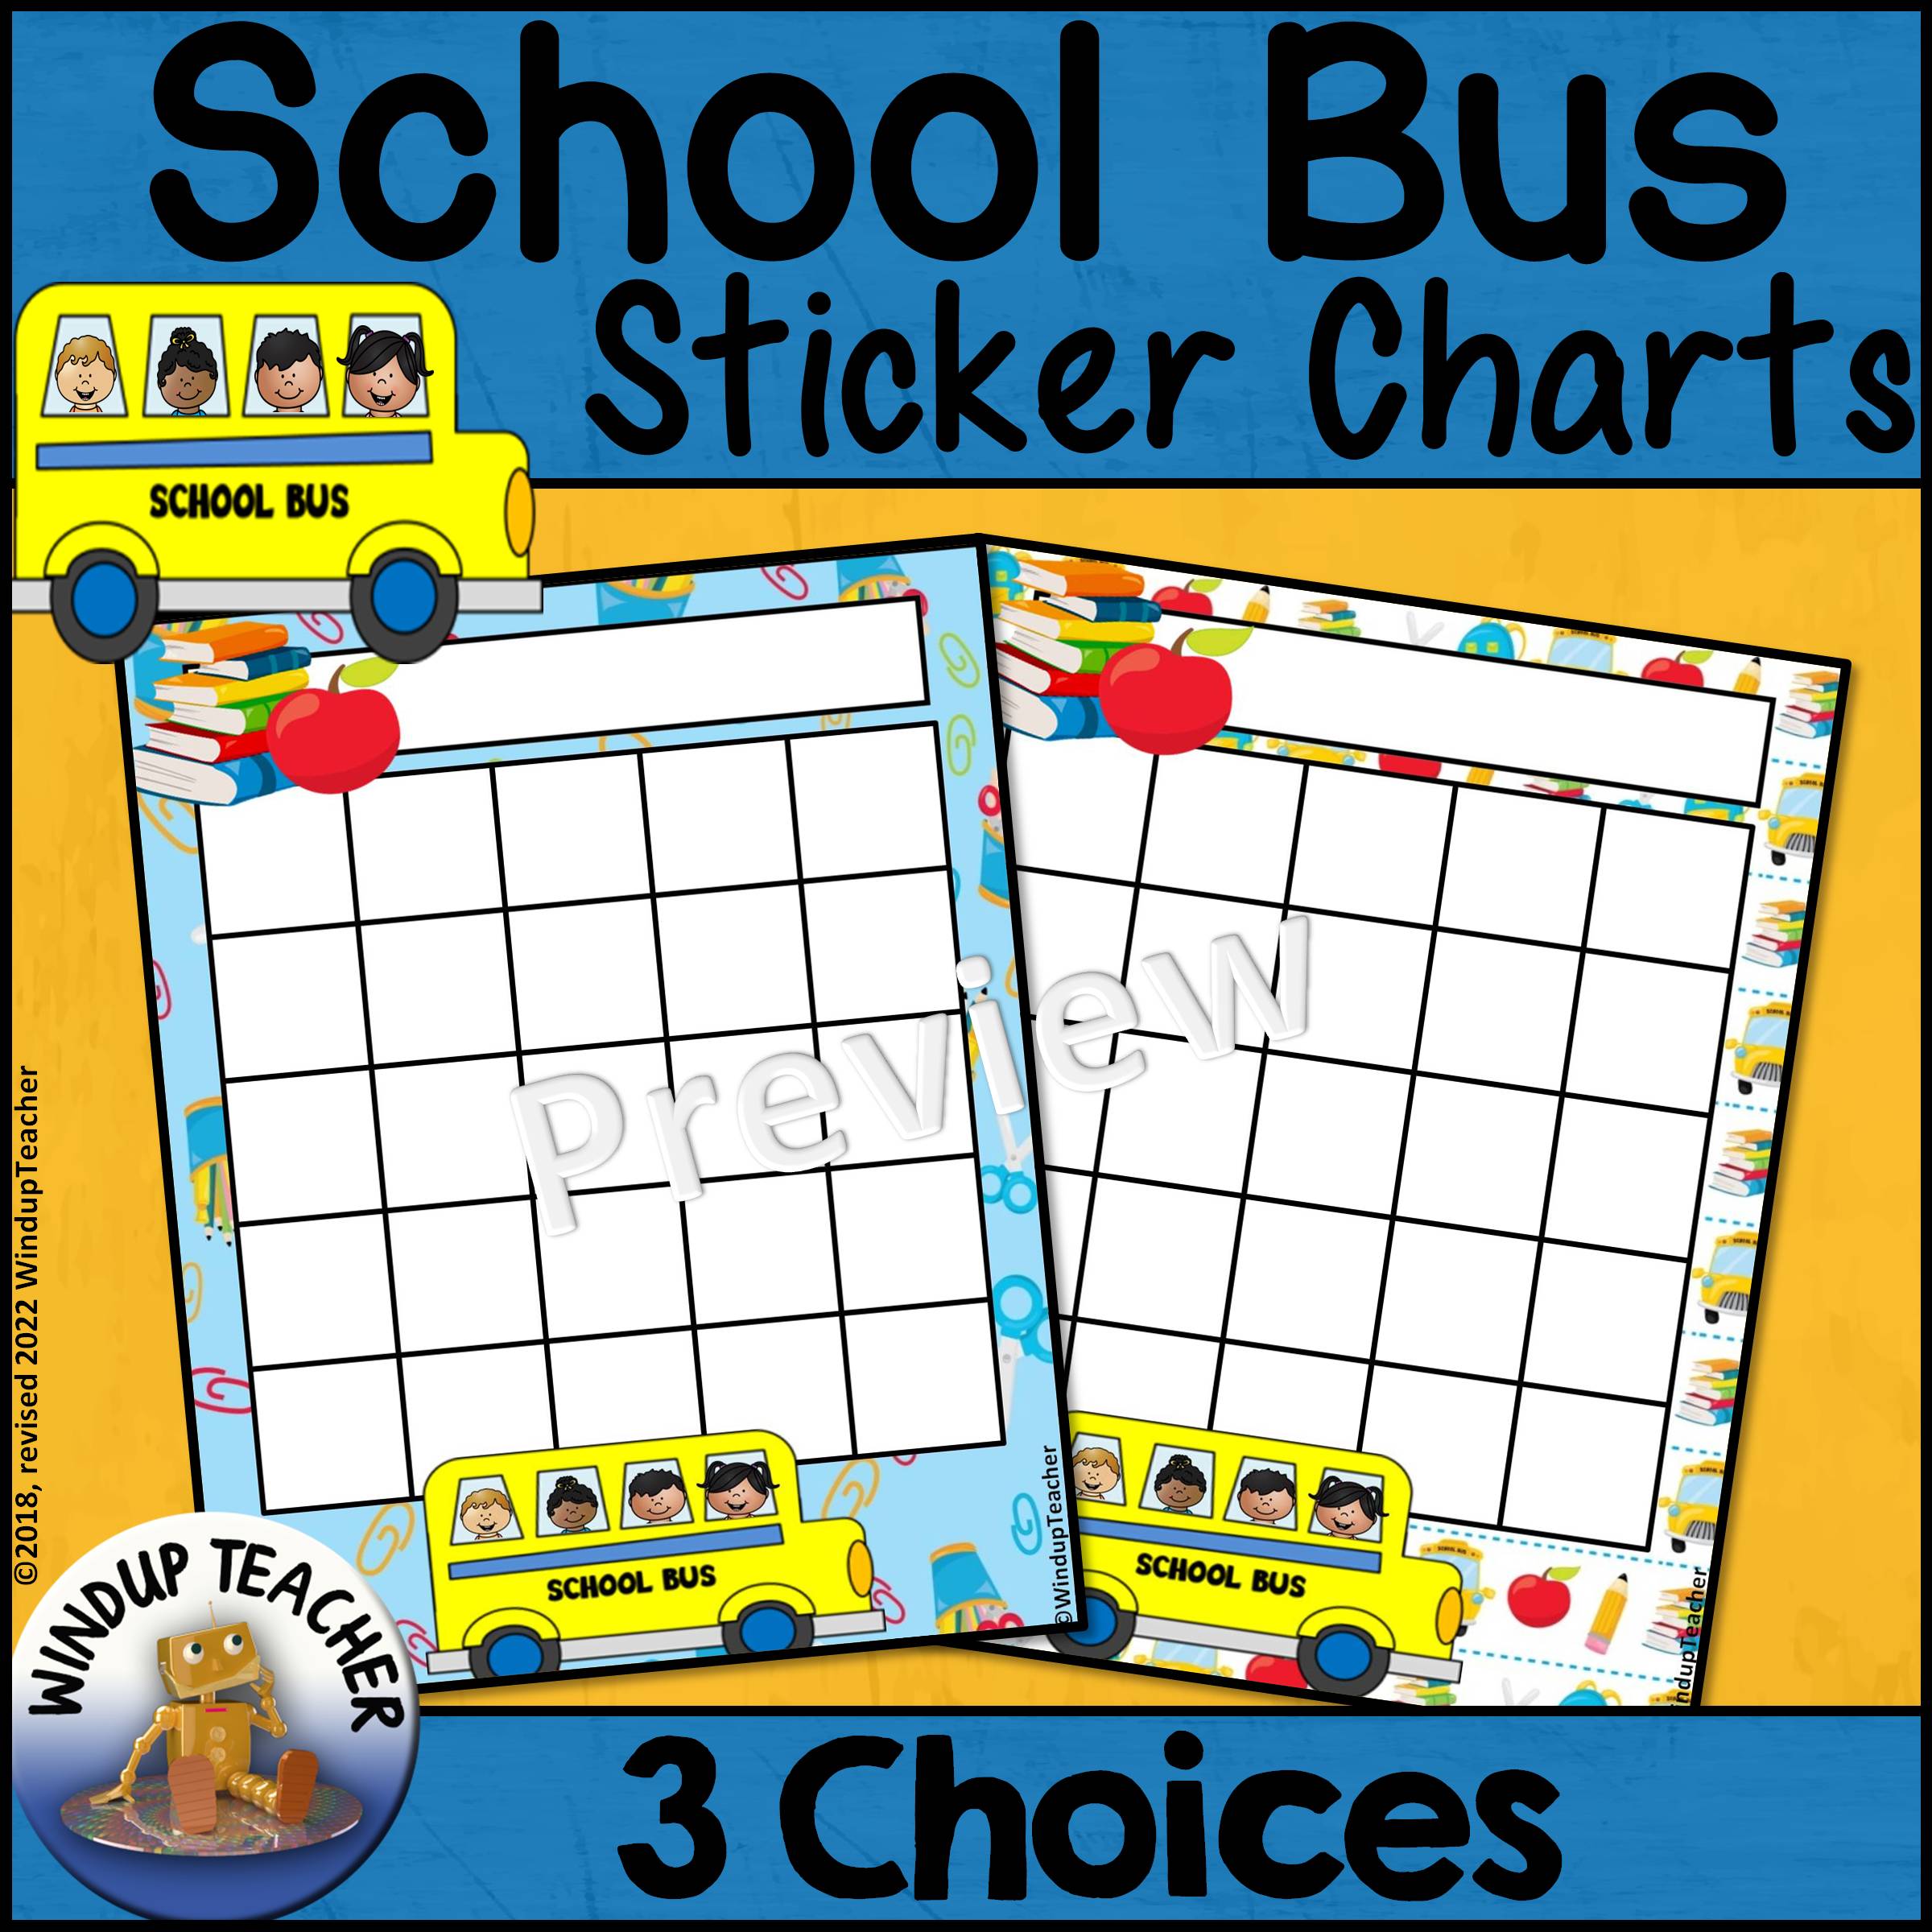 School Bus Sticker Charts